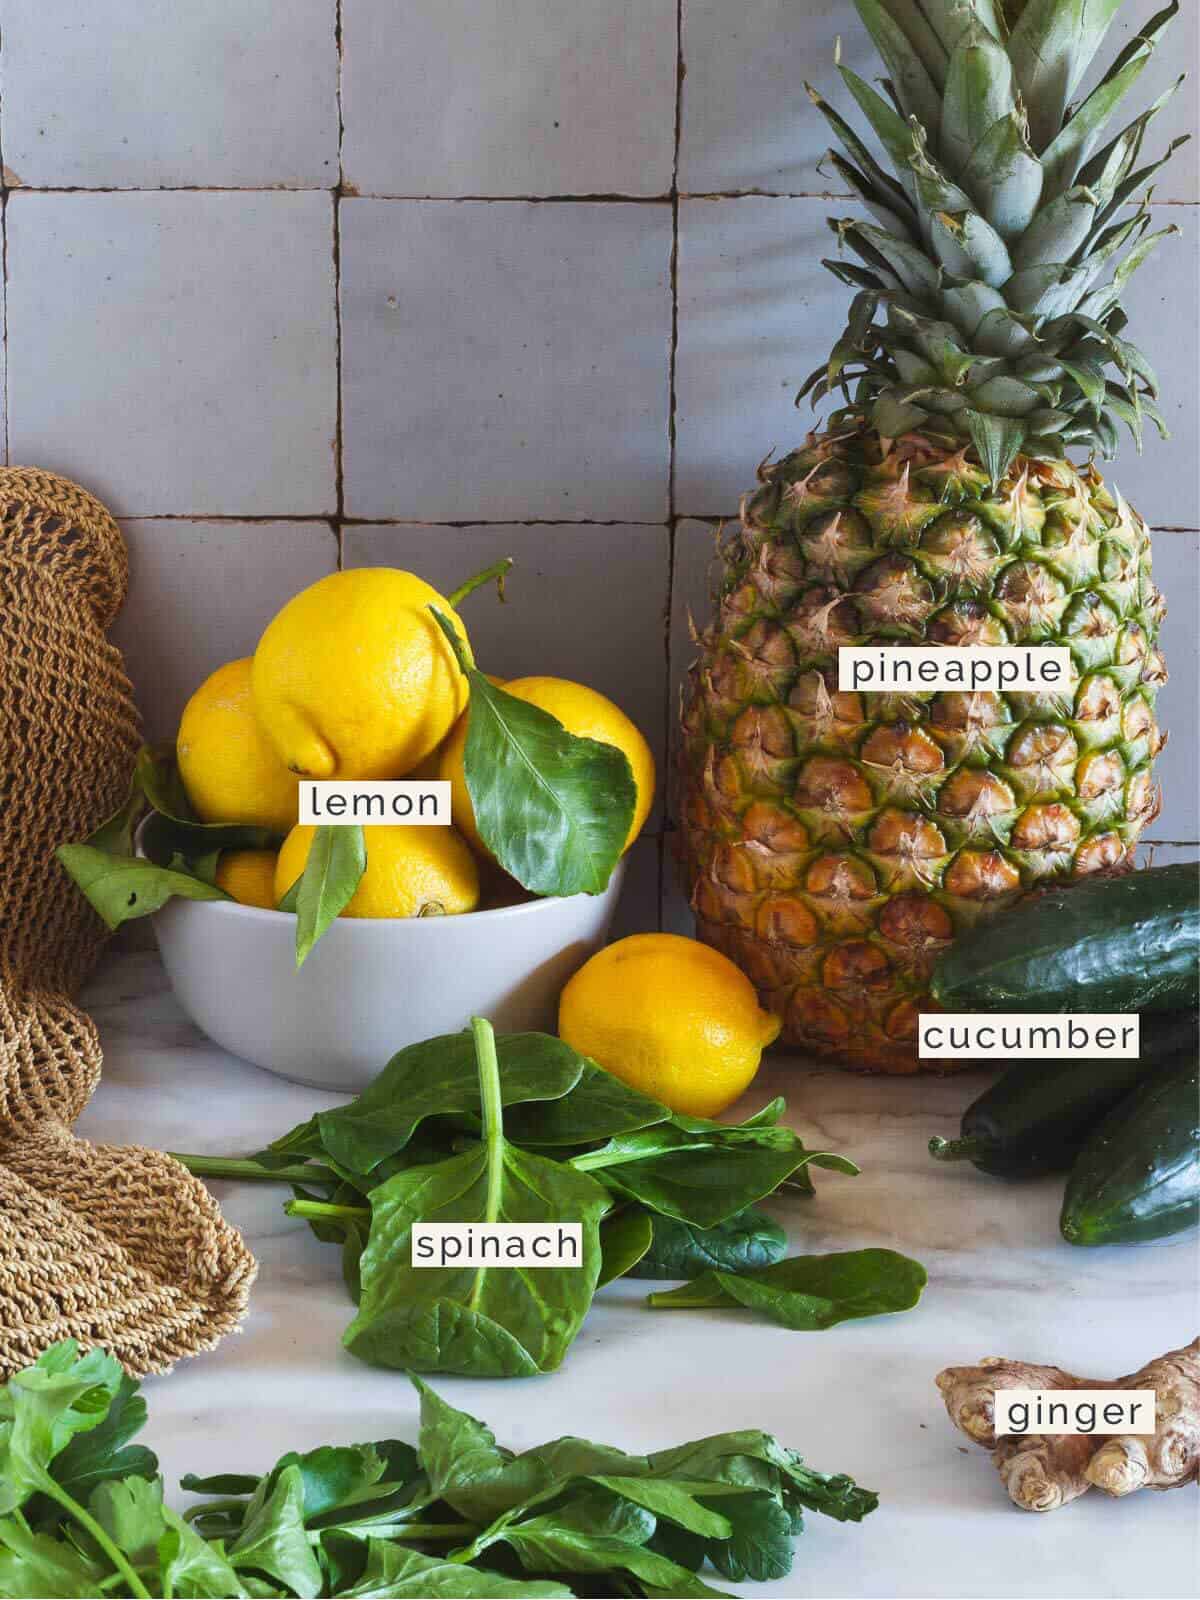 ingredients to make pineapple cucumber ginger lemon weight Loss Juice.